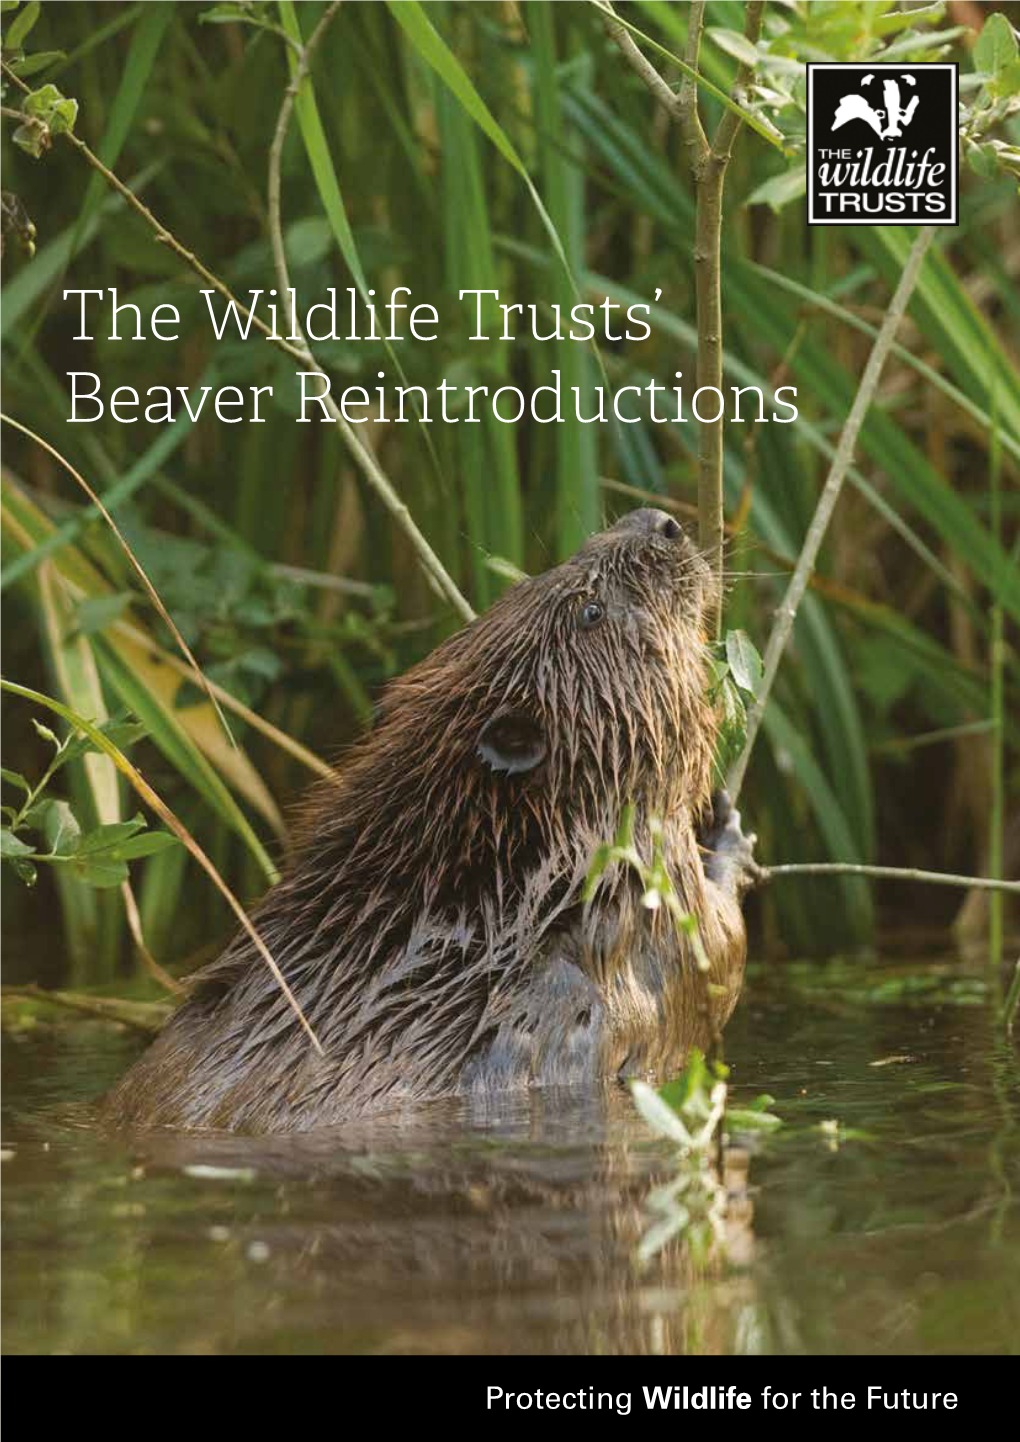 The Wildlife Trusts' Beaver Reintroductions